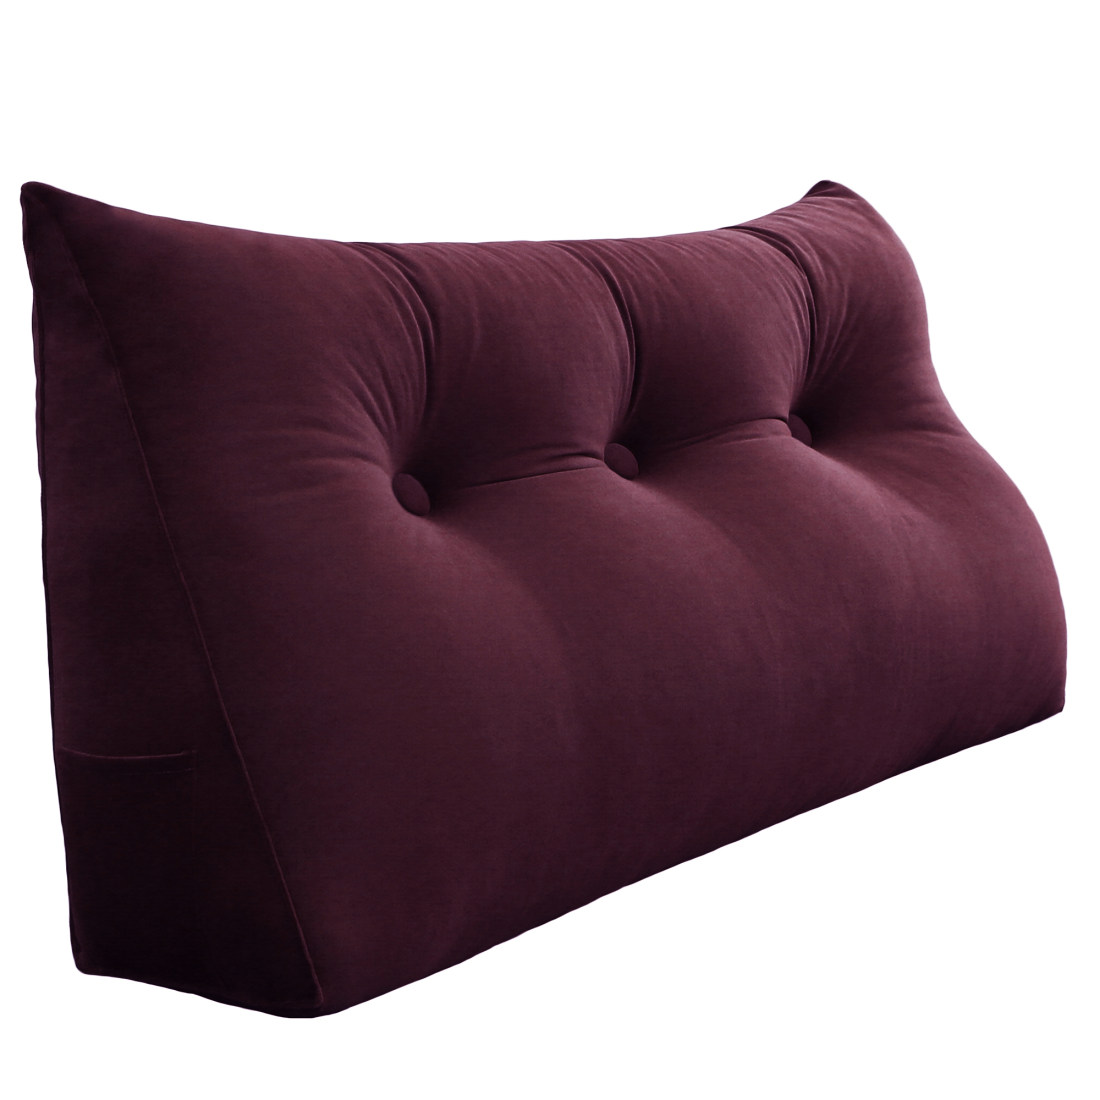 https://www.zencent.com/wp-content/uploads/2020/06/965-backrest-pillow-39inch-wine-1.jpg